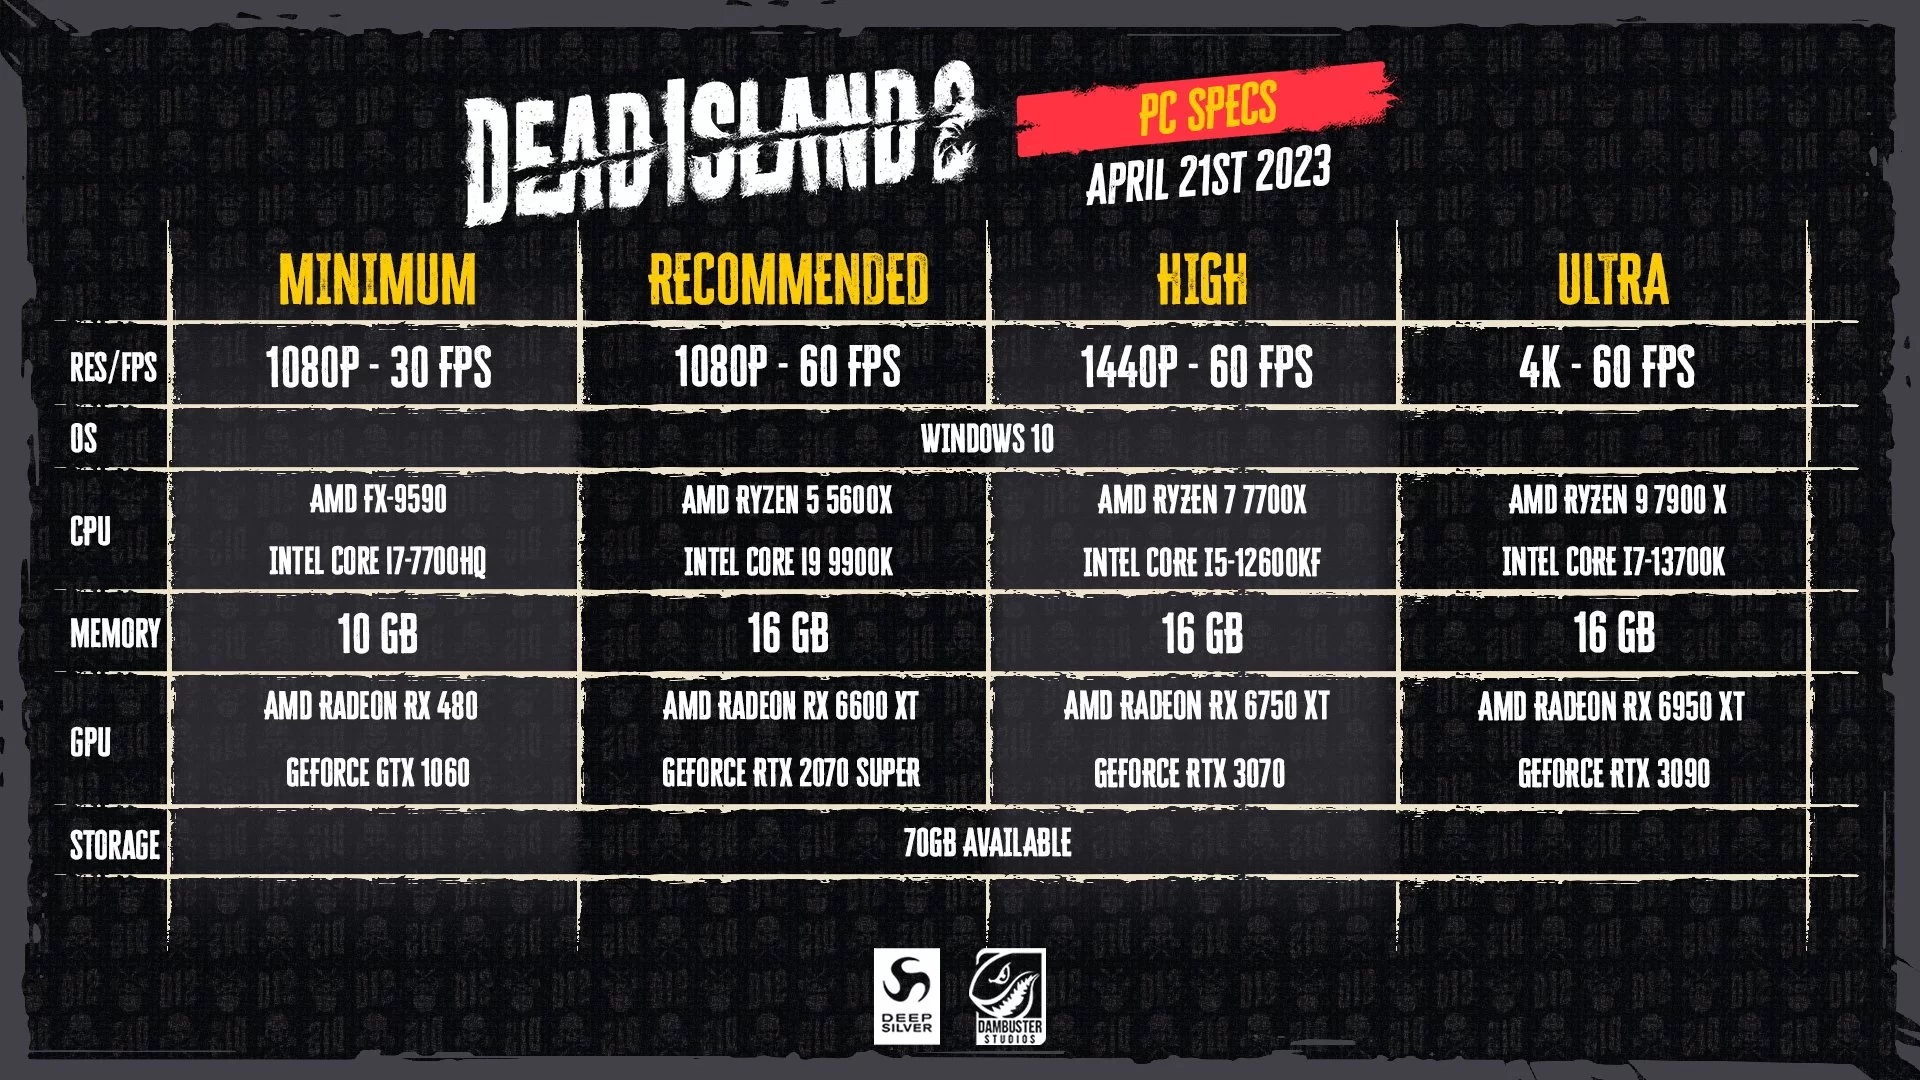 Ftcfv9eX0AASWfb | Dead Island 2 | เผยสเปก Dead Island 2 ขั้นต่ำและแนะนำเวอร์ชั่น PC การ์ดจอเก่าอายุ 6 ปีก็ยังเล่นได้อยู่